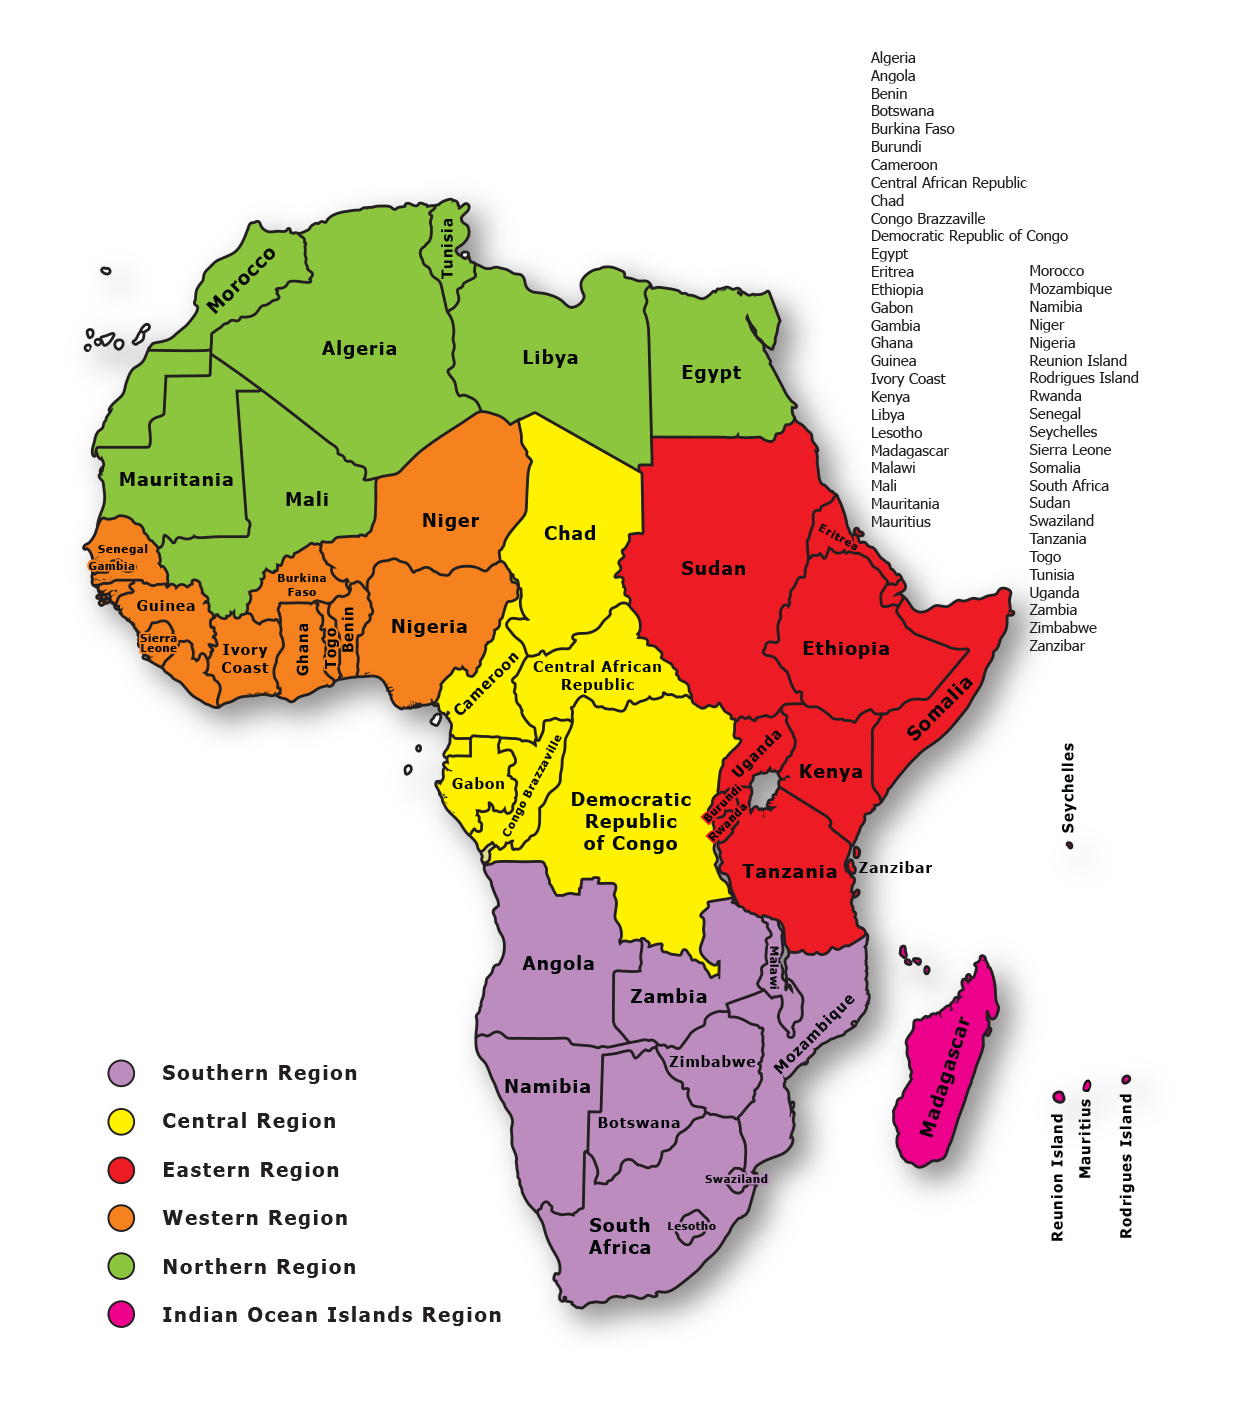 Africa Regions Deafnet